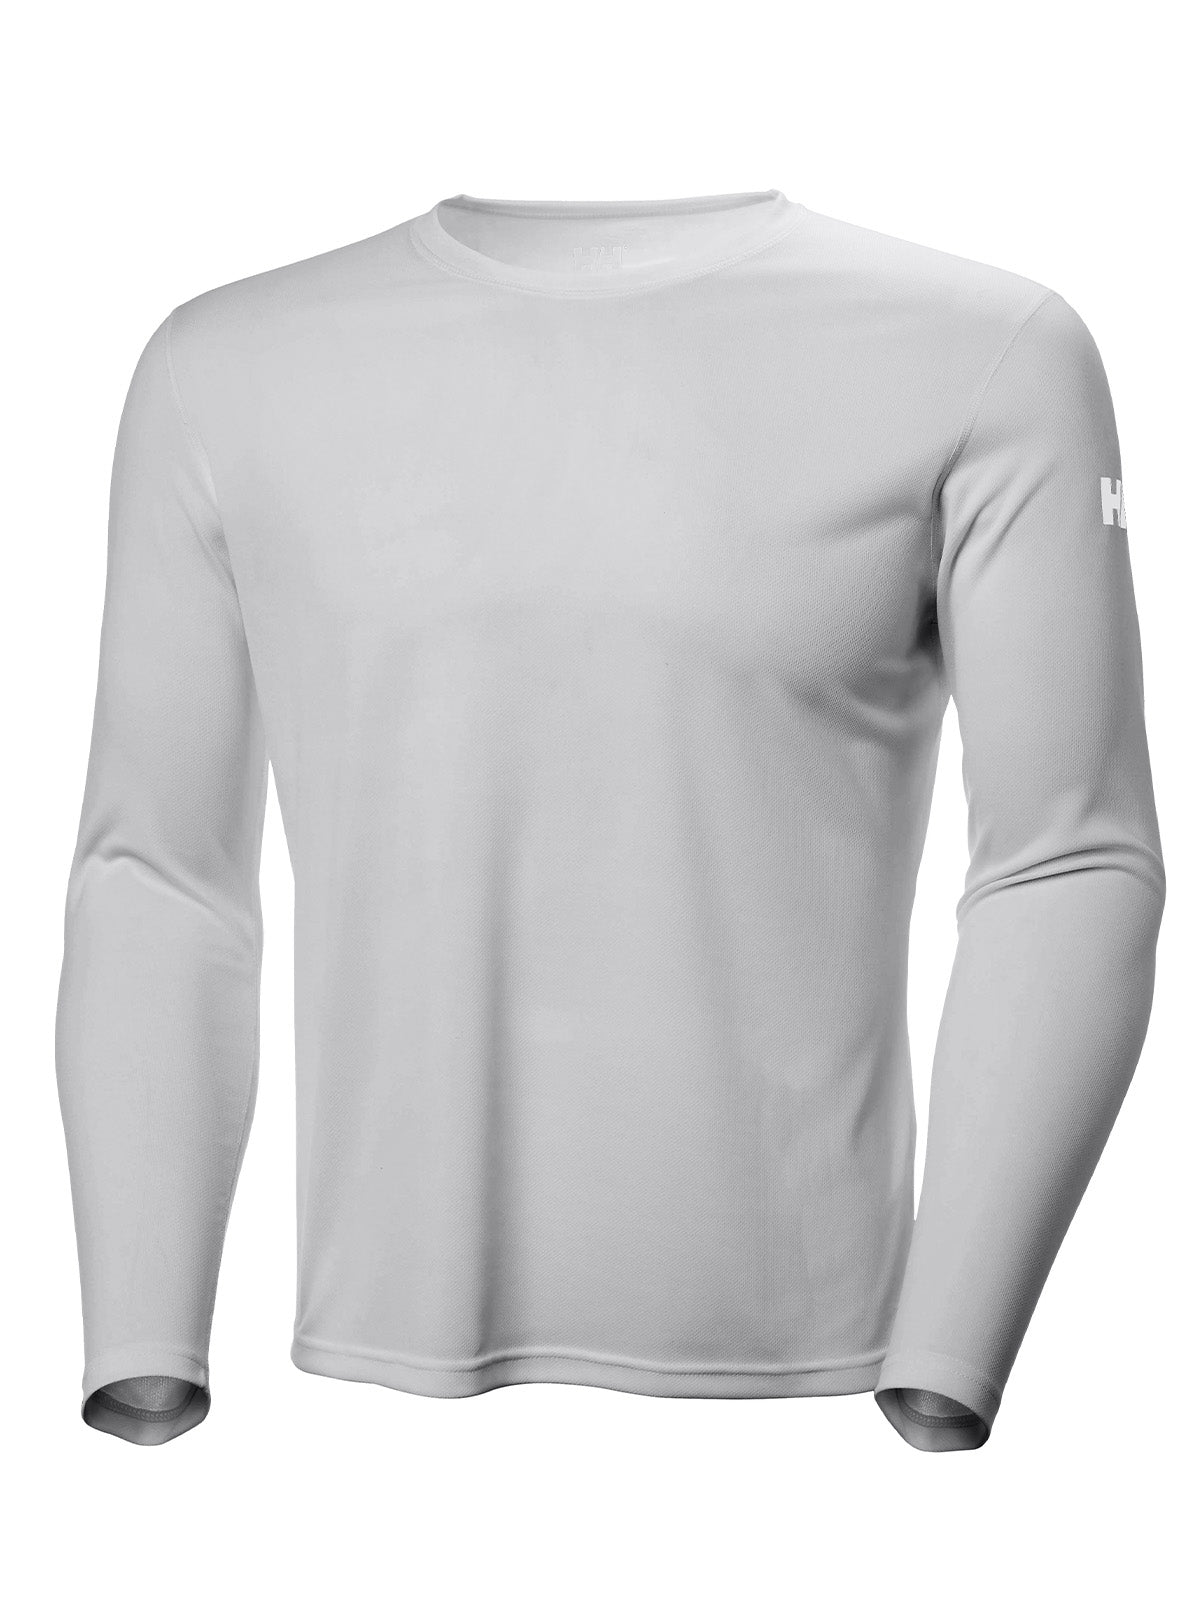 HH Technical Long Sleeve Crew Shirt for Men